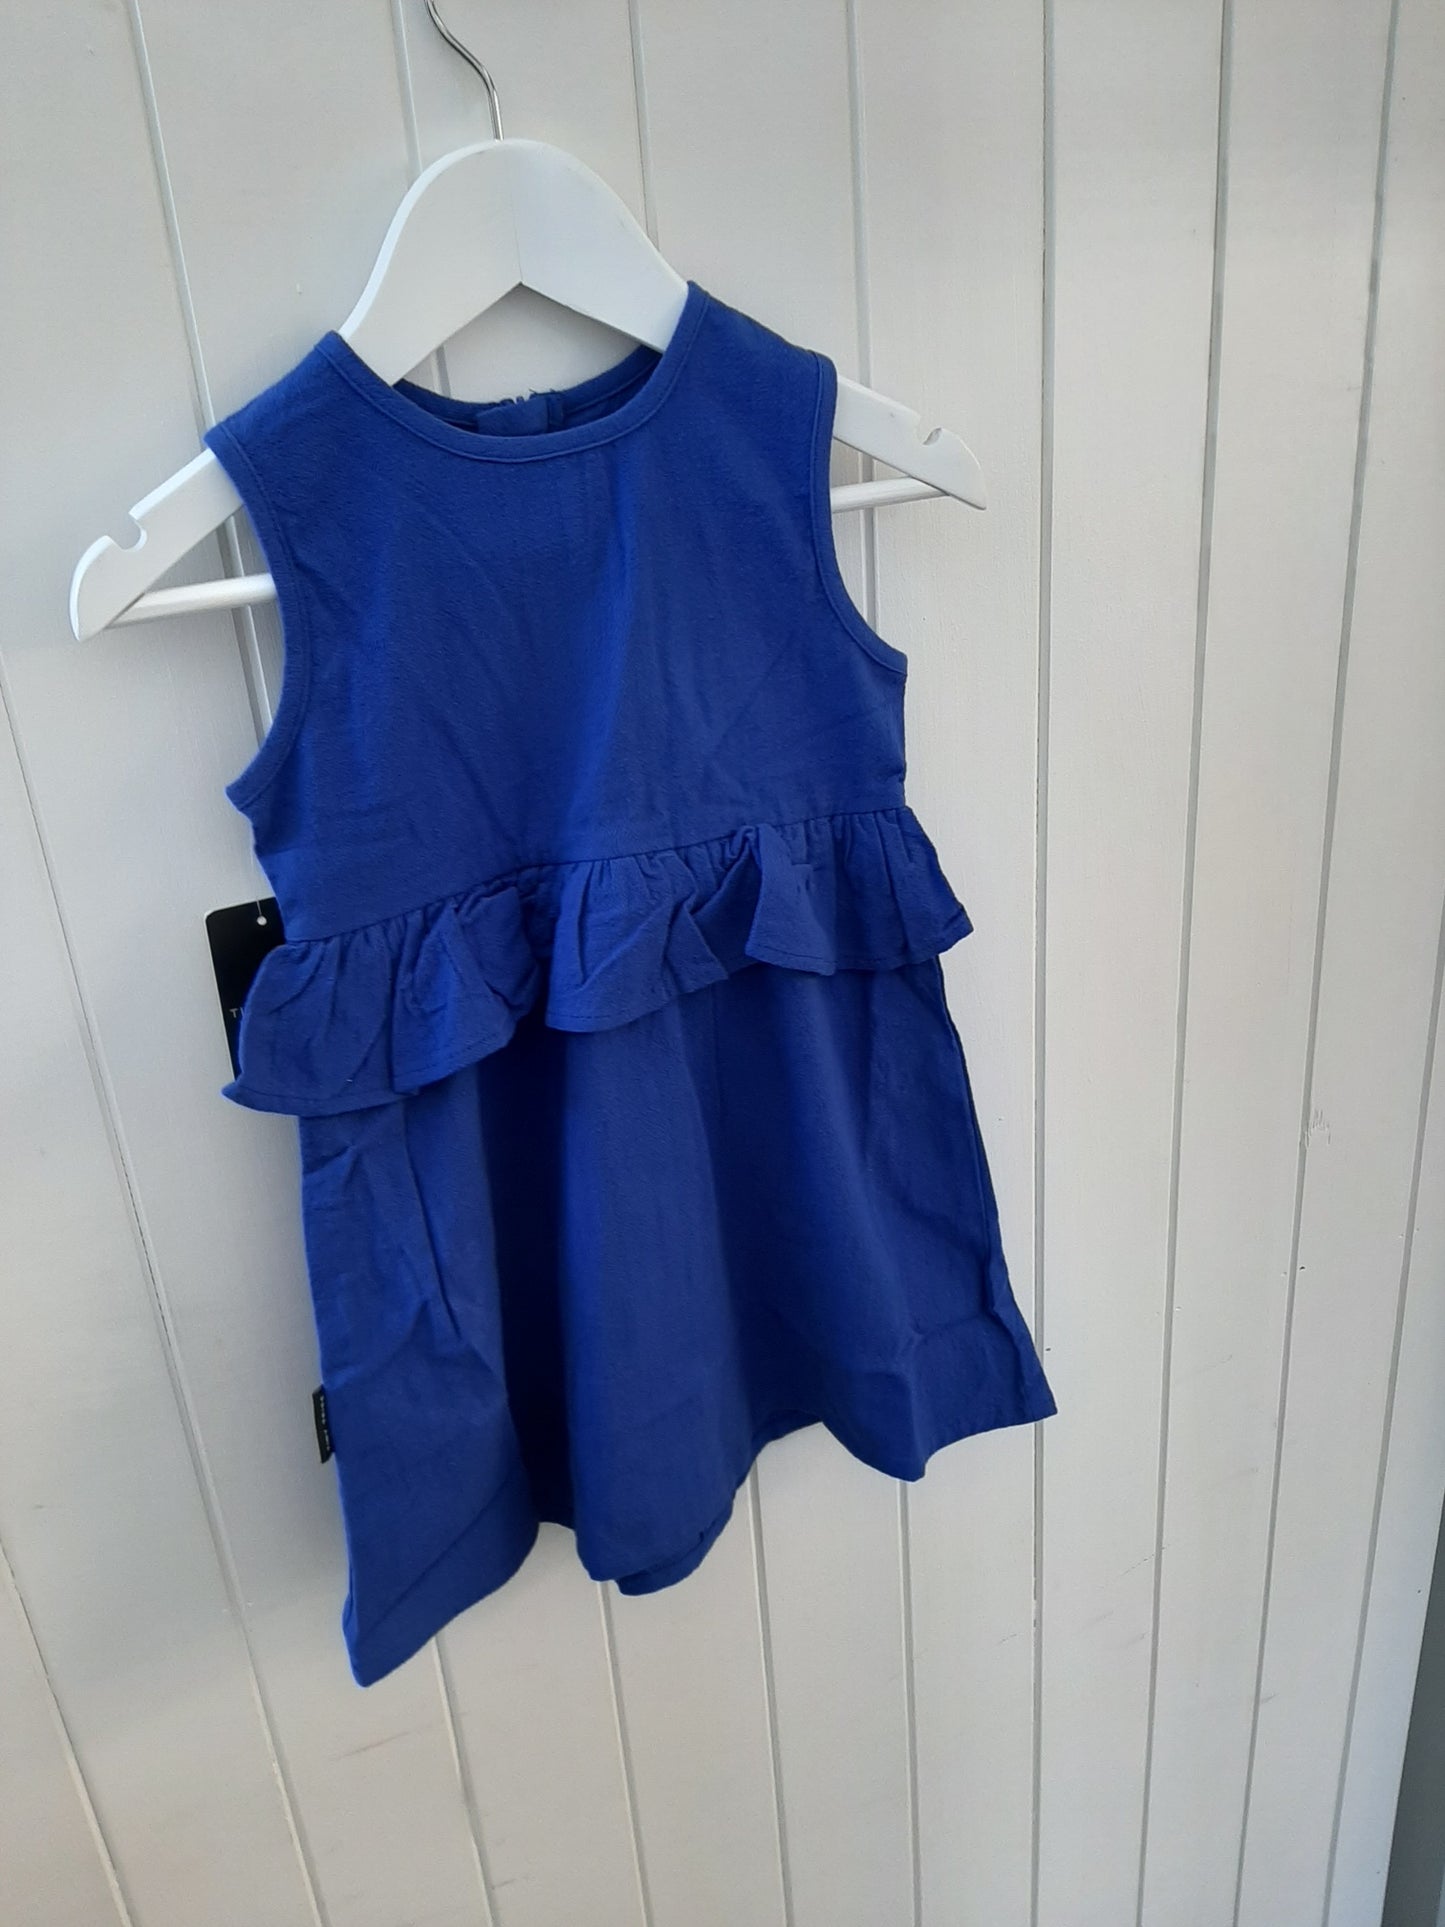 Tiny Tribe Blue Peplum Dress